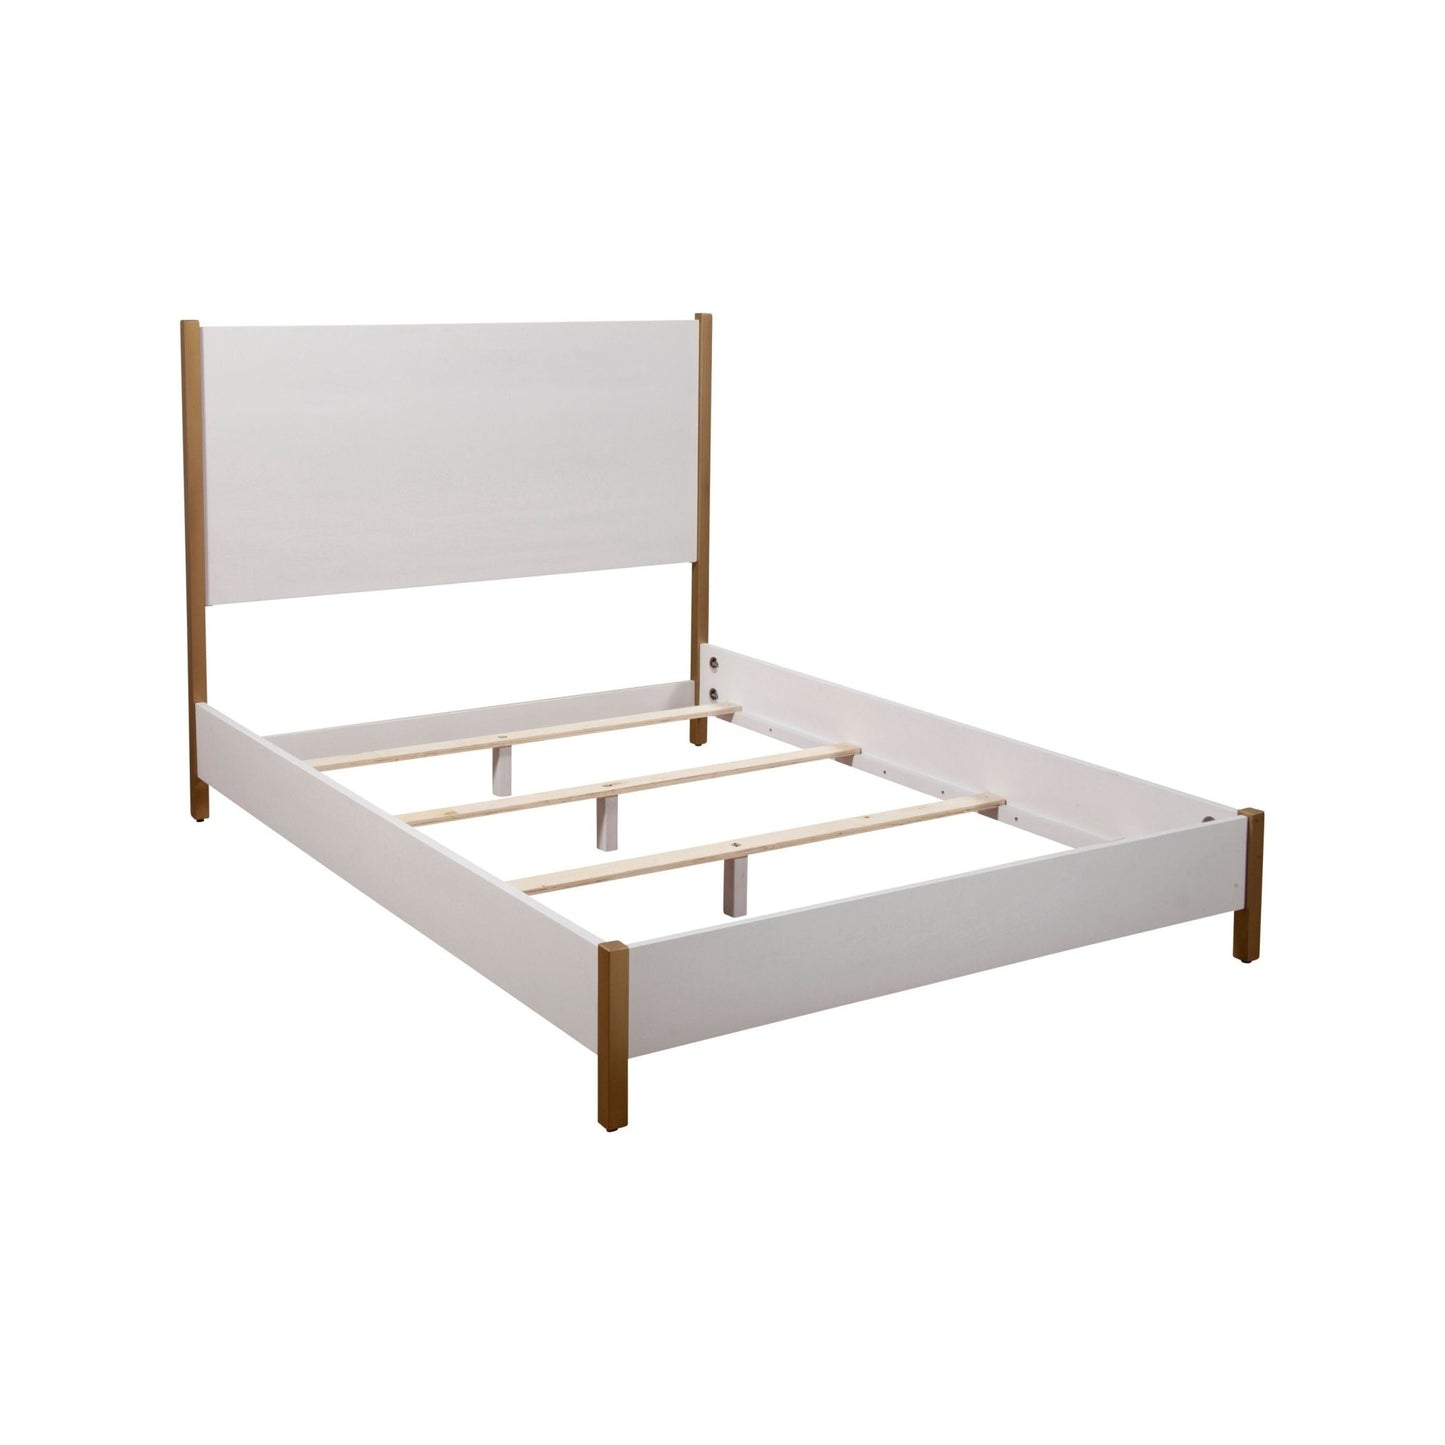 Madelyn Panel Bed - Alpine Furniture